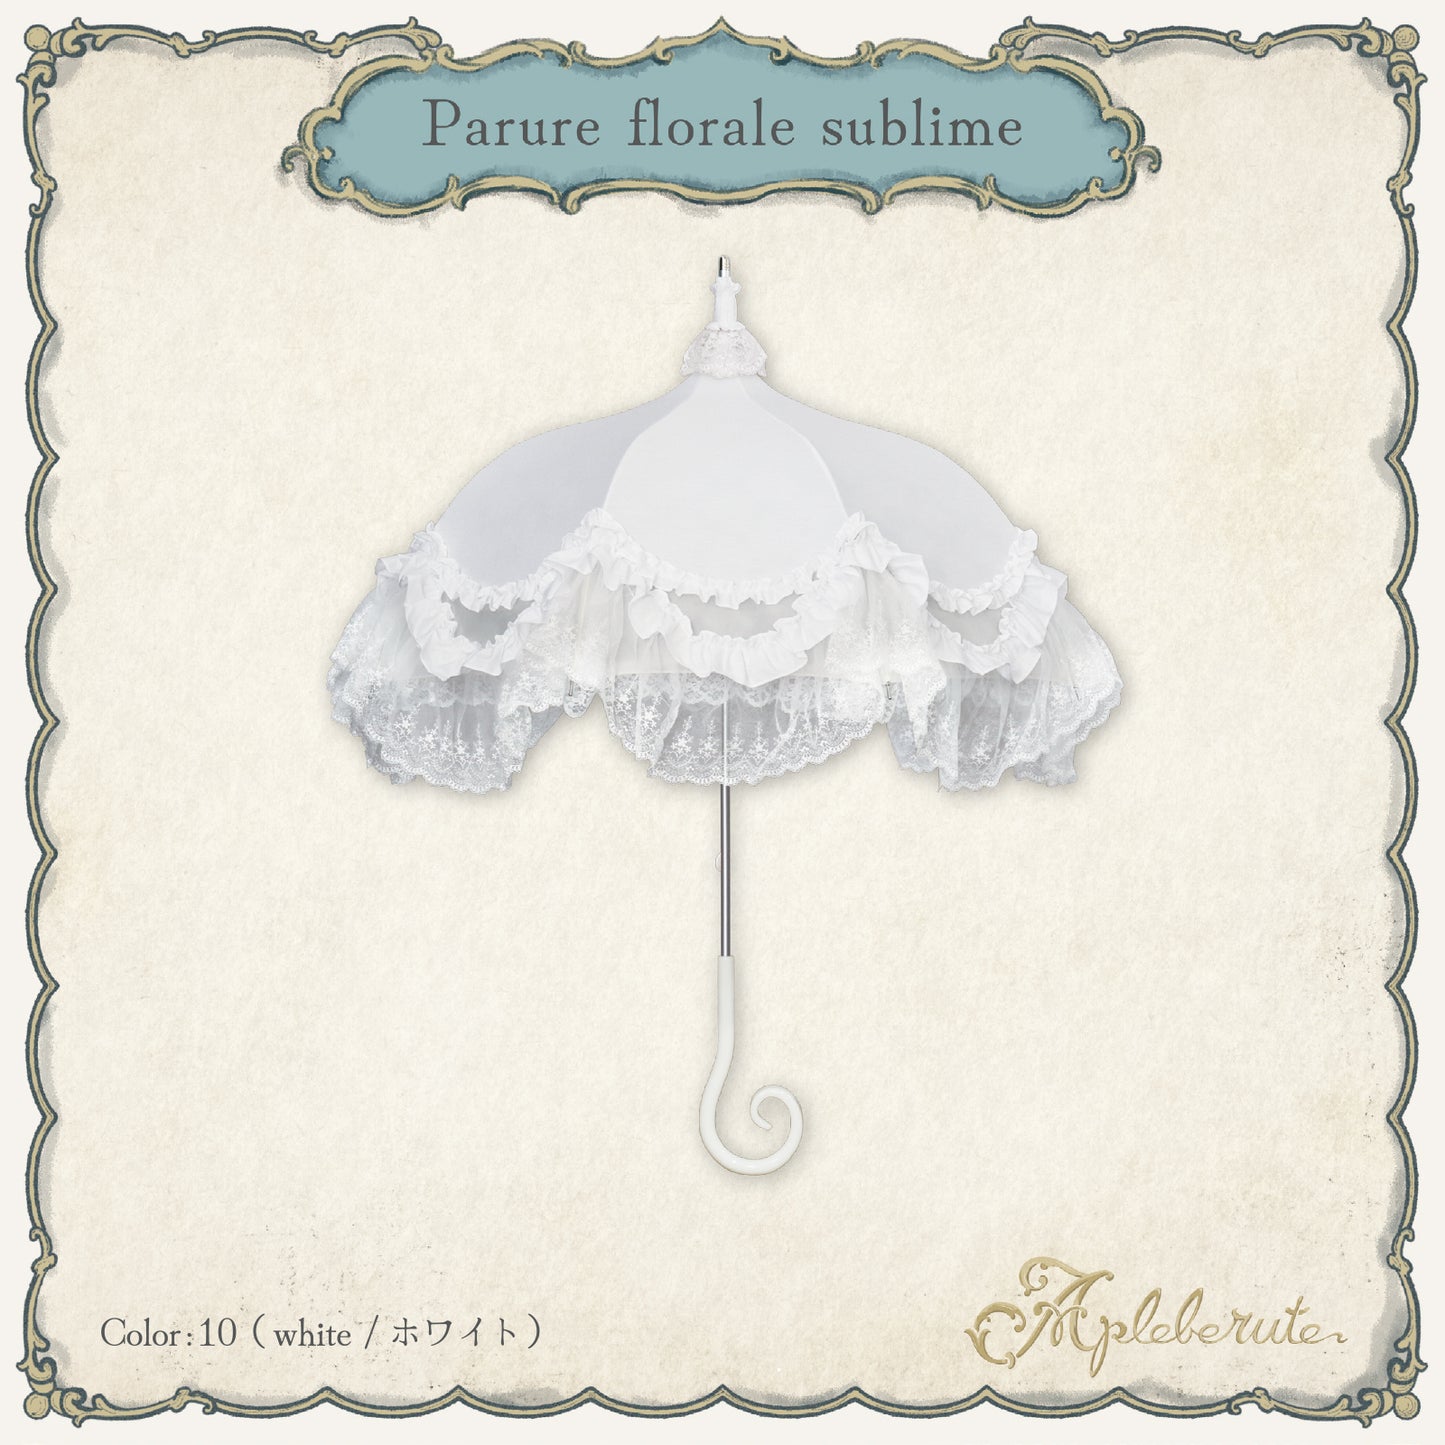 【New】parure-florale-sublime (パリュール フロラル スブリム) - パゴダ 日傘 晴雨兼用 UVカット ショート丈 フリル レース